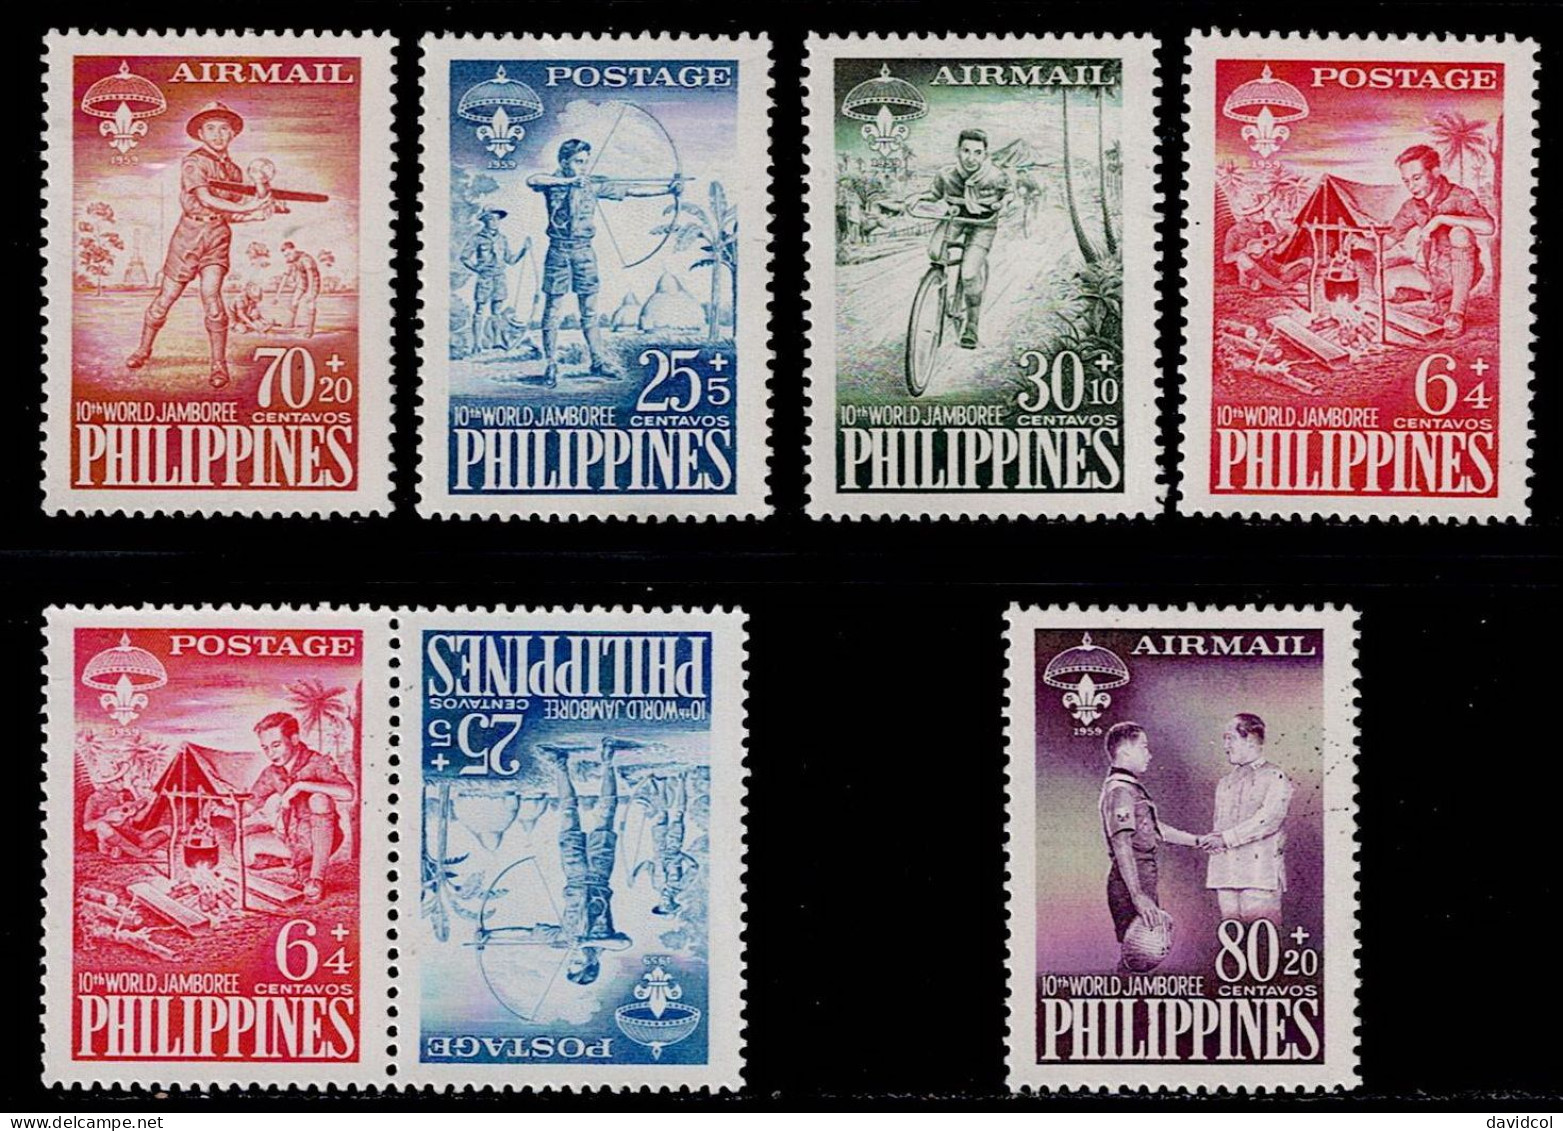 FIL-10- PHILIPPINES - 1959 - MNH -SCOUTS- 10TH WORLD JAMBOREE -AIR +SEMIPOSTAL + TETE-BECHE - Philippines